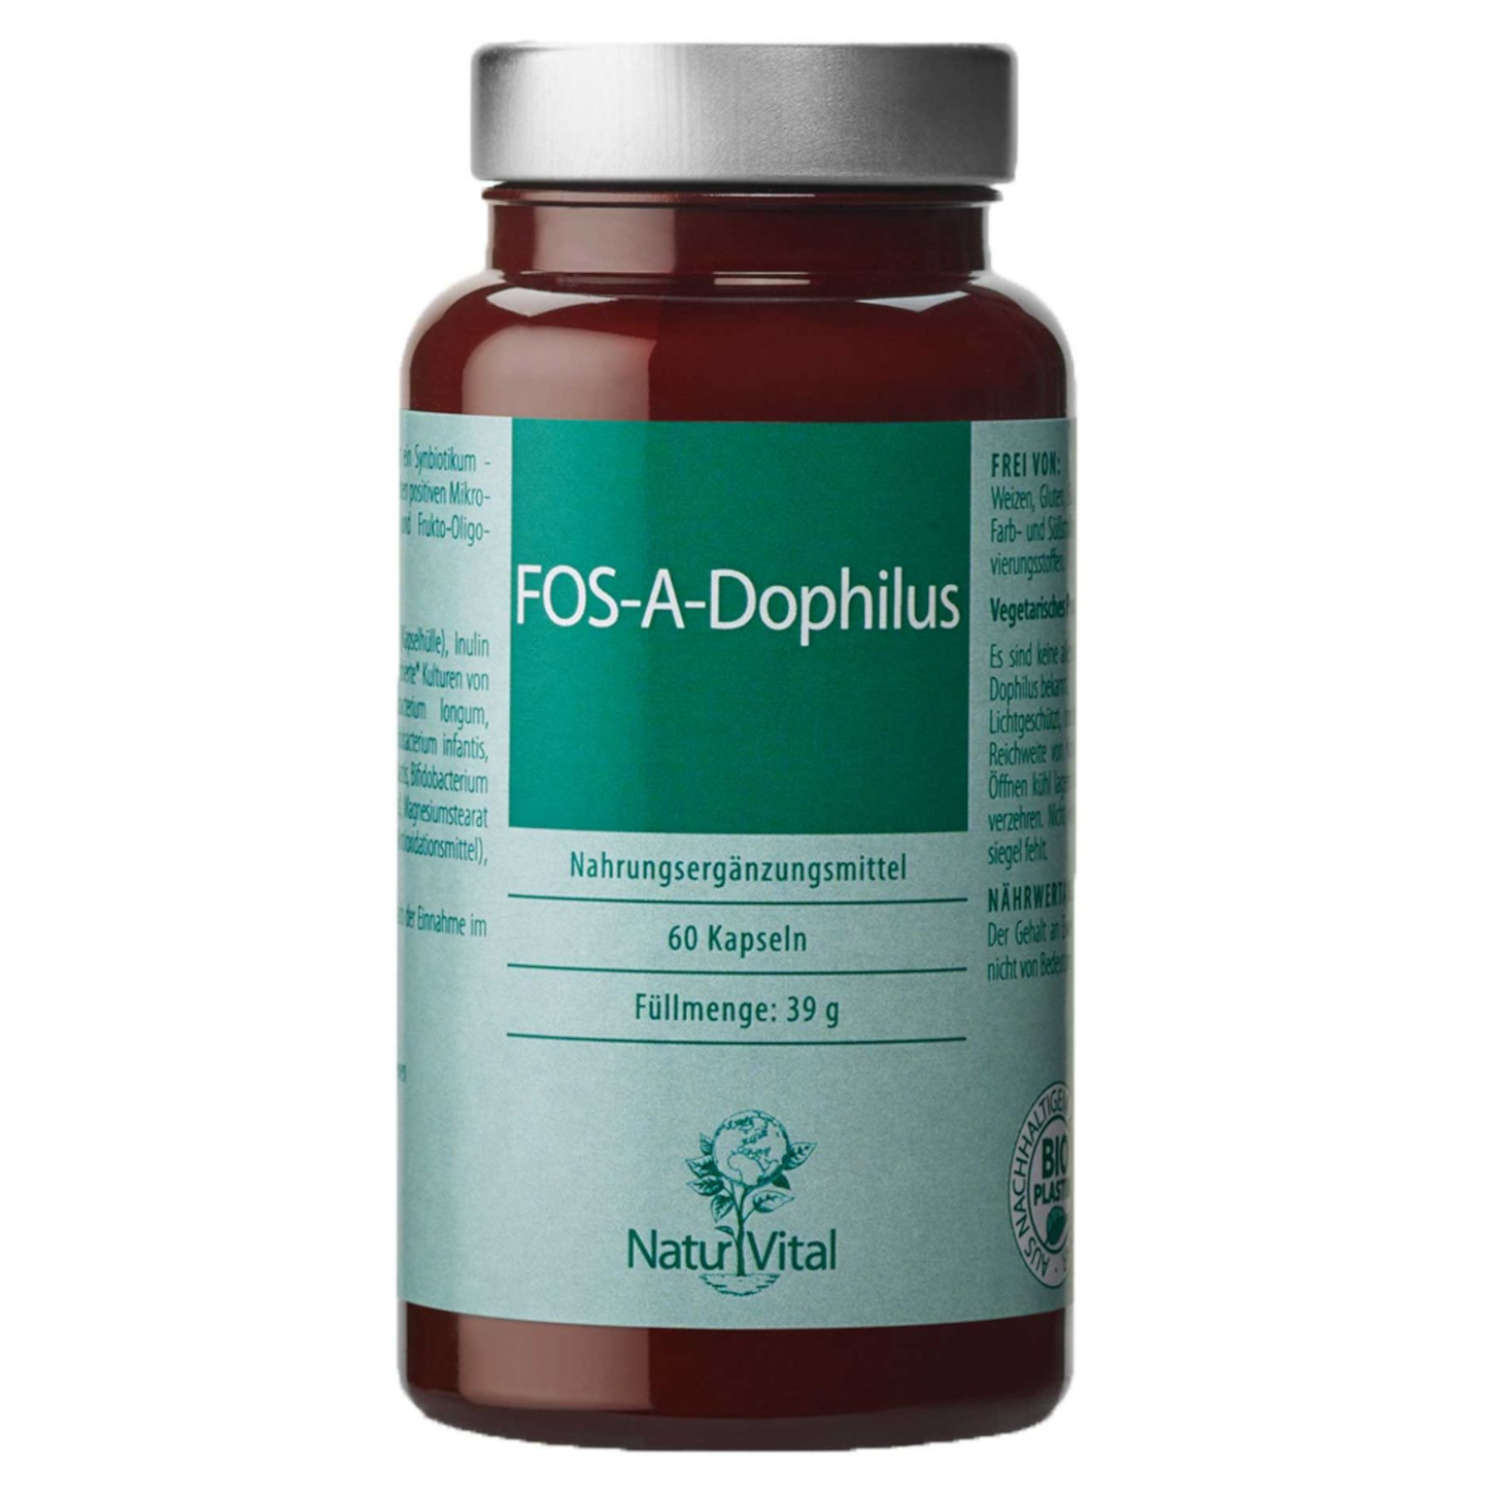 Natur Vital Fos-A-Dophilus - 60 Kapseln